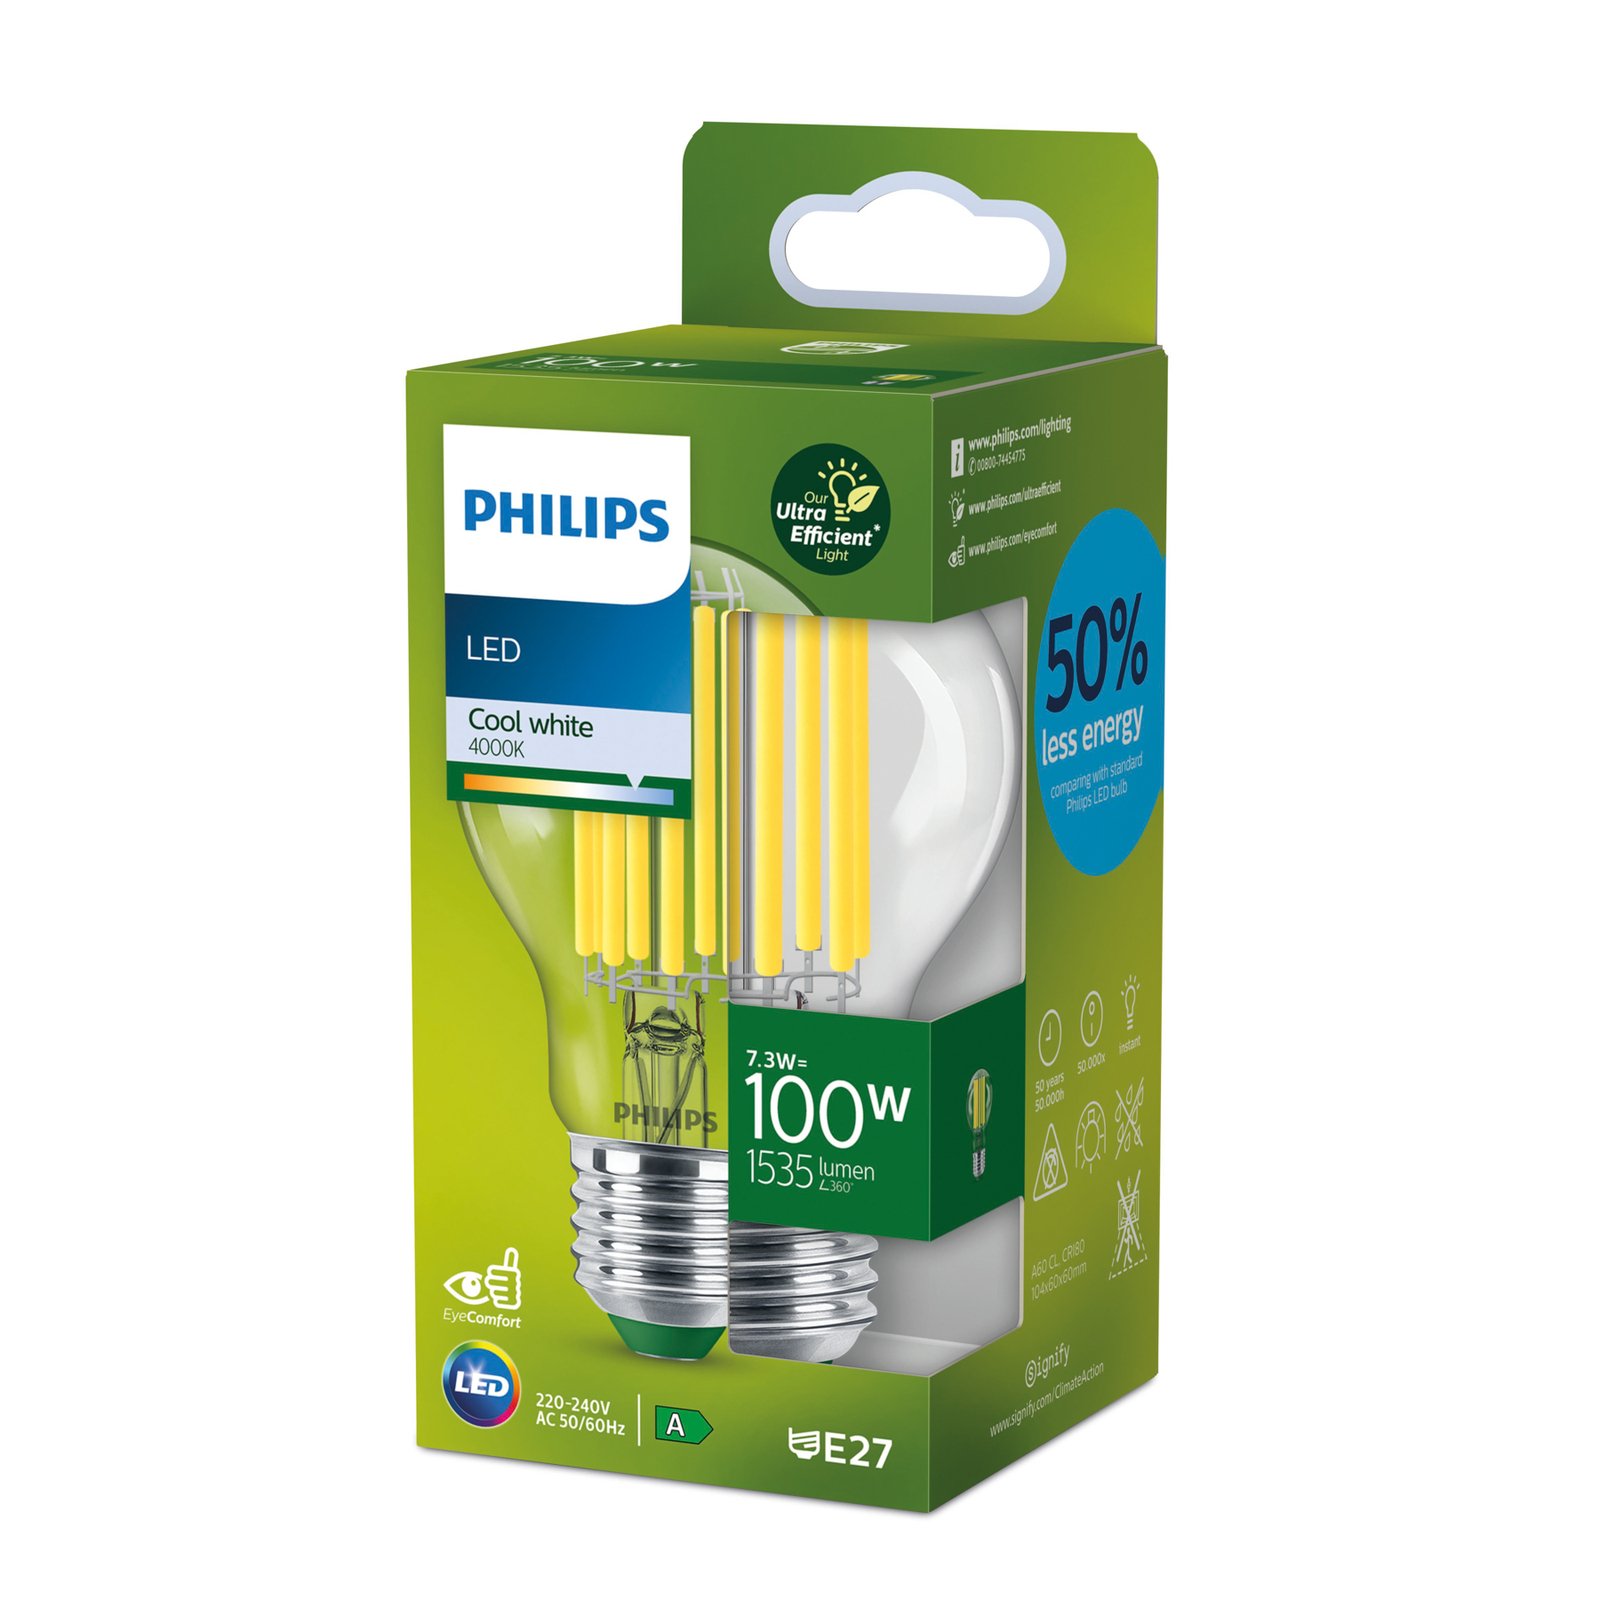 Philips E27 LED-Lampe A60 7,3W 1535lm 4.000K klar